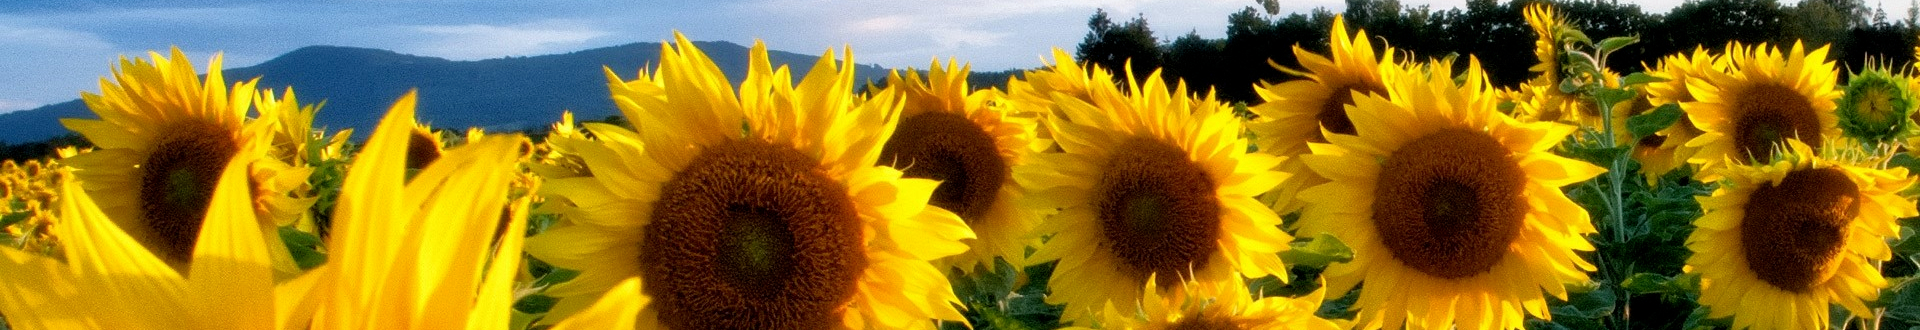 Sunflower_head.jpg